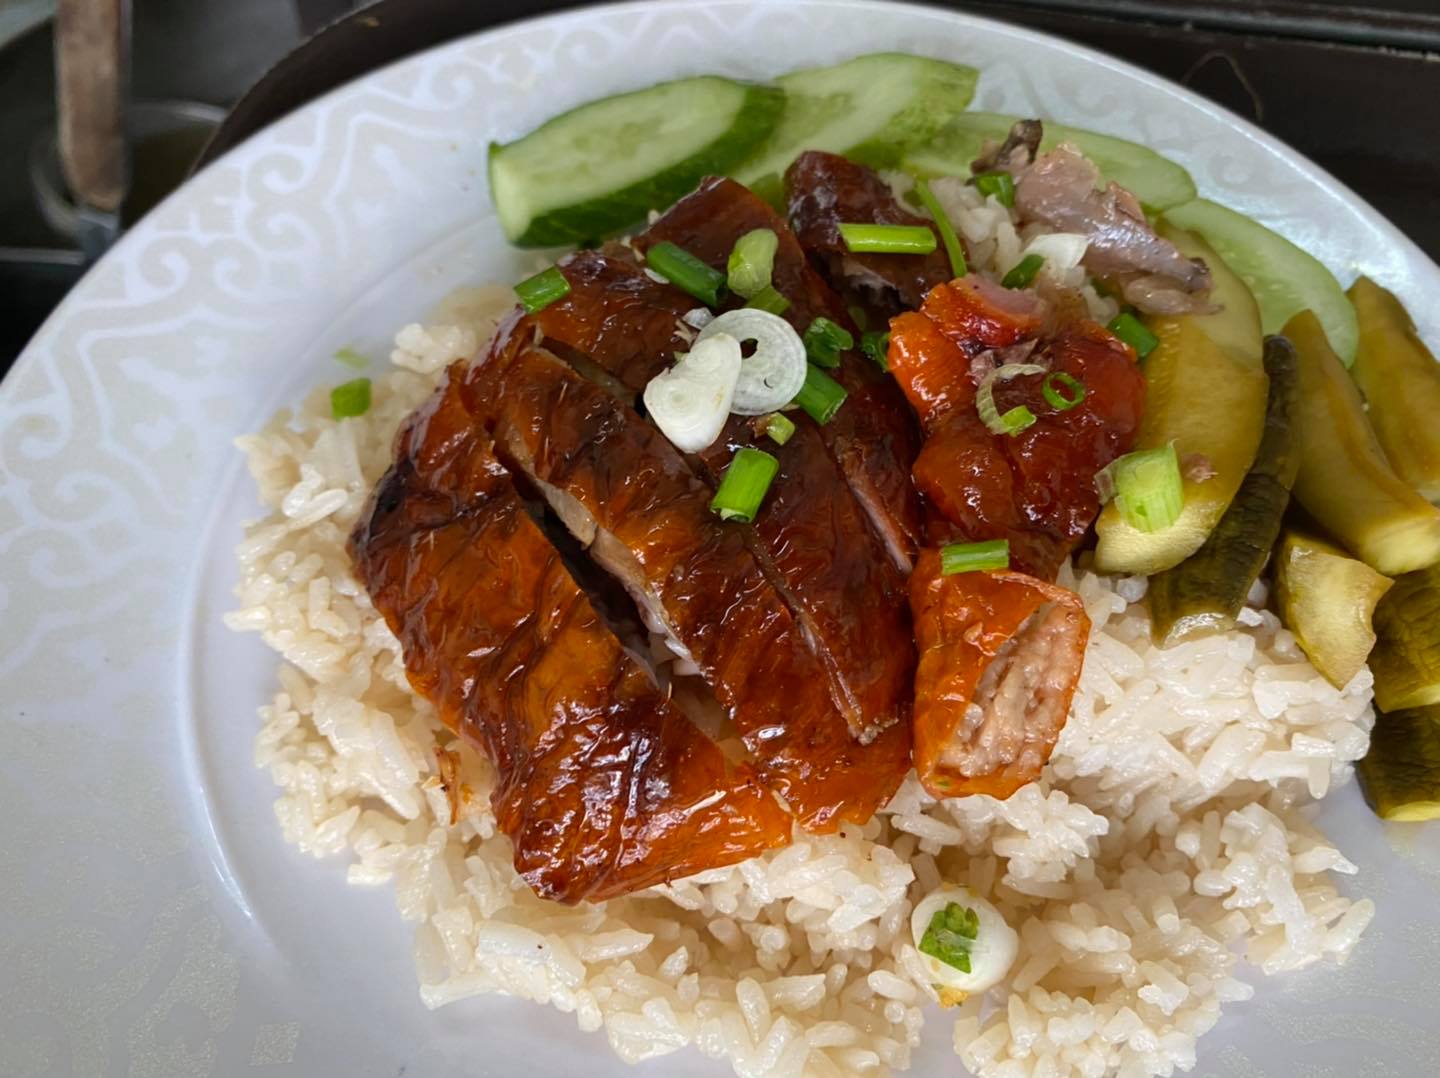 8.Rice with crispy pork